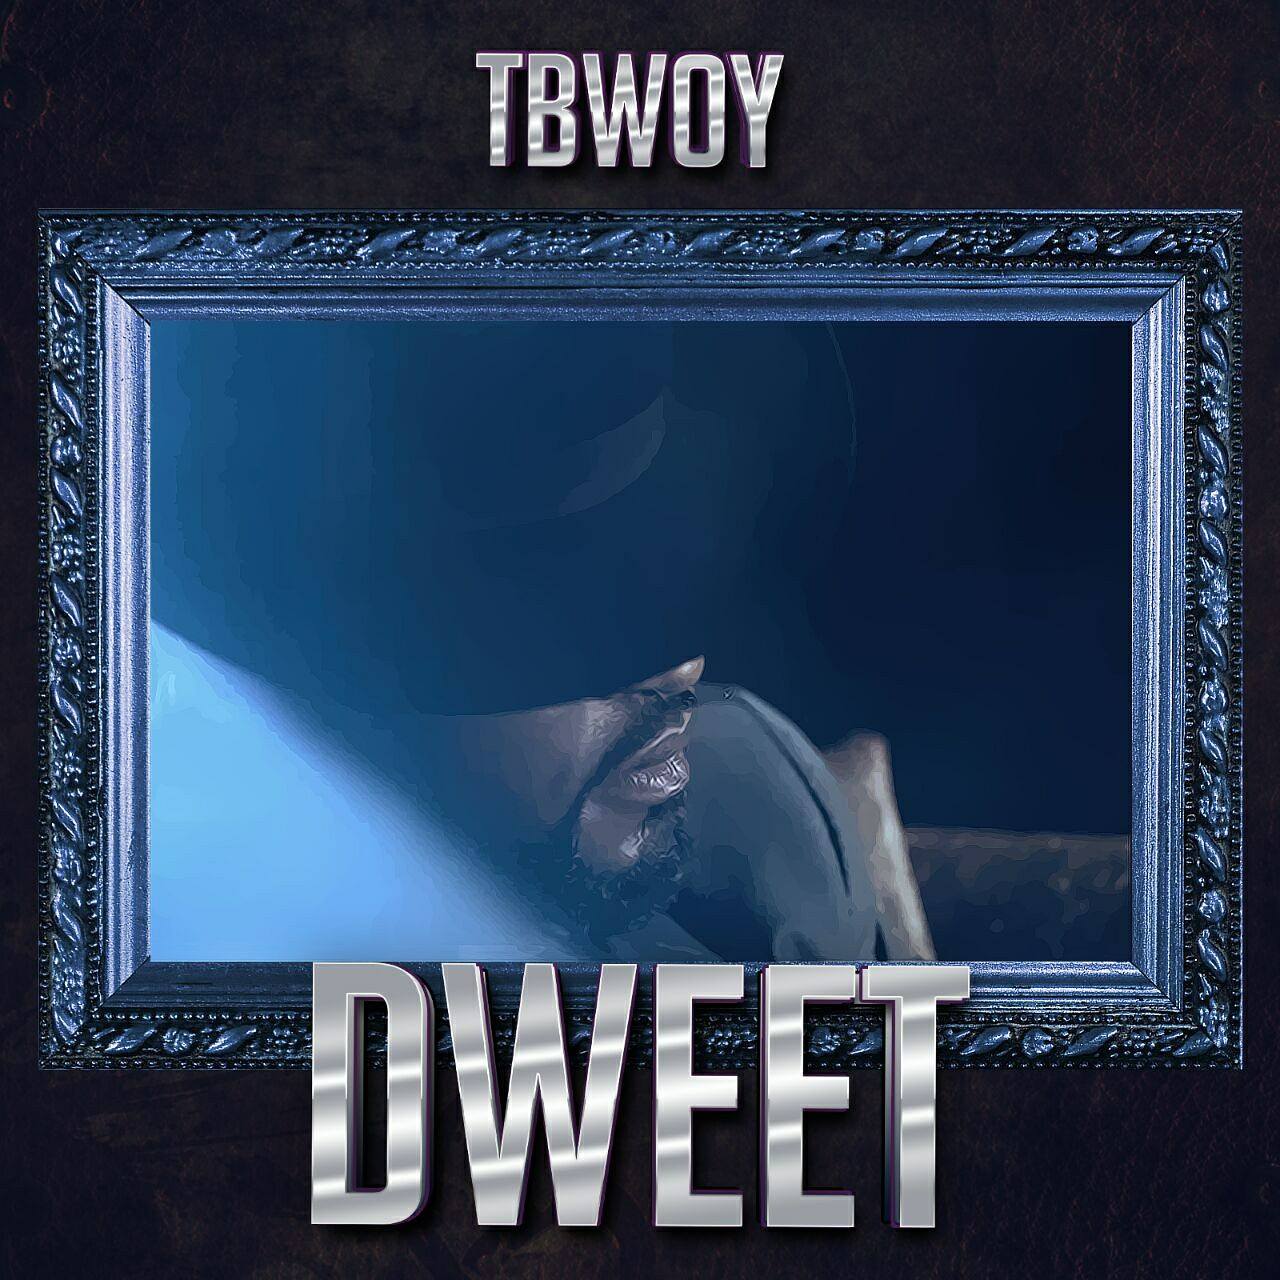 Dweet by TBwoy | Album